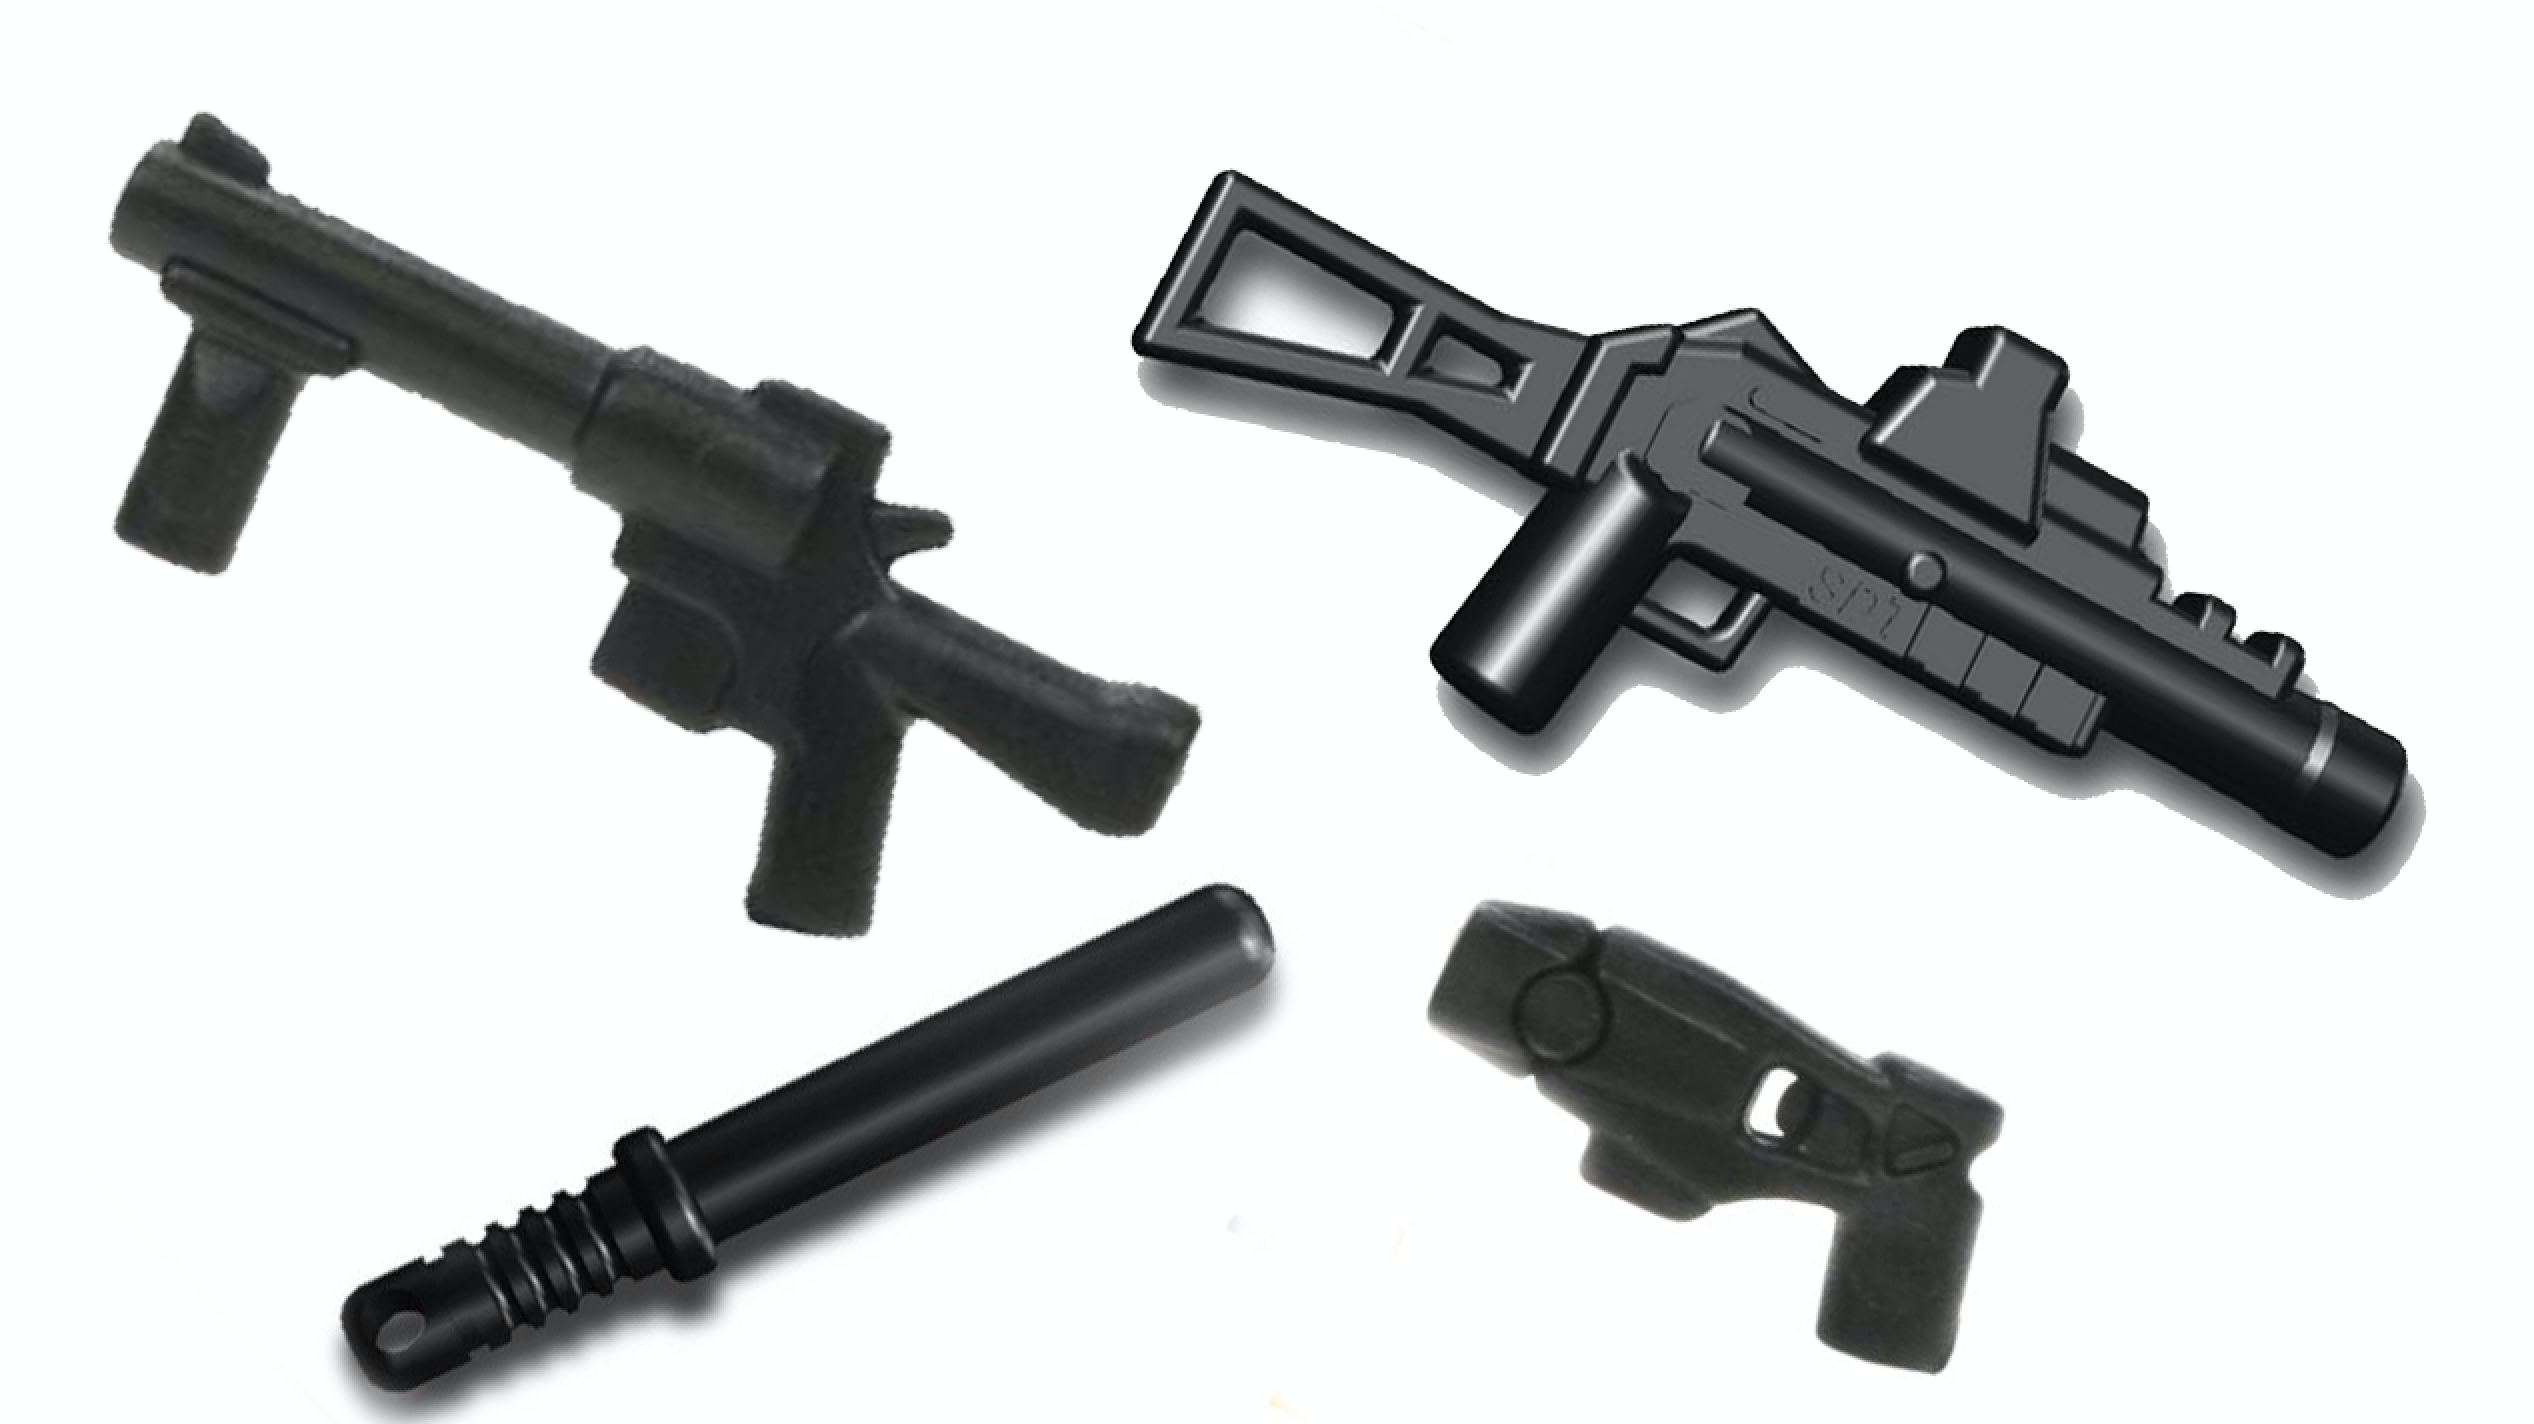 LEGO City Police Accessories - Header Image